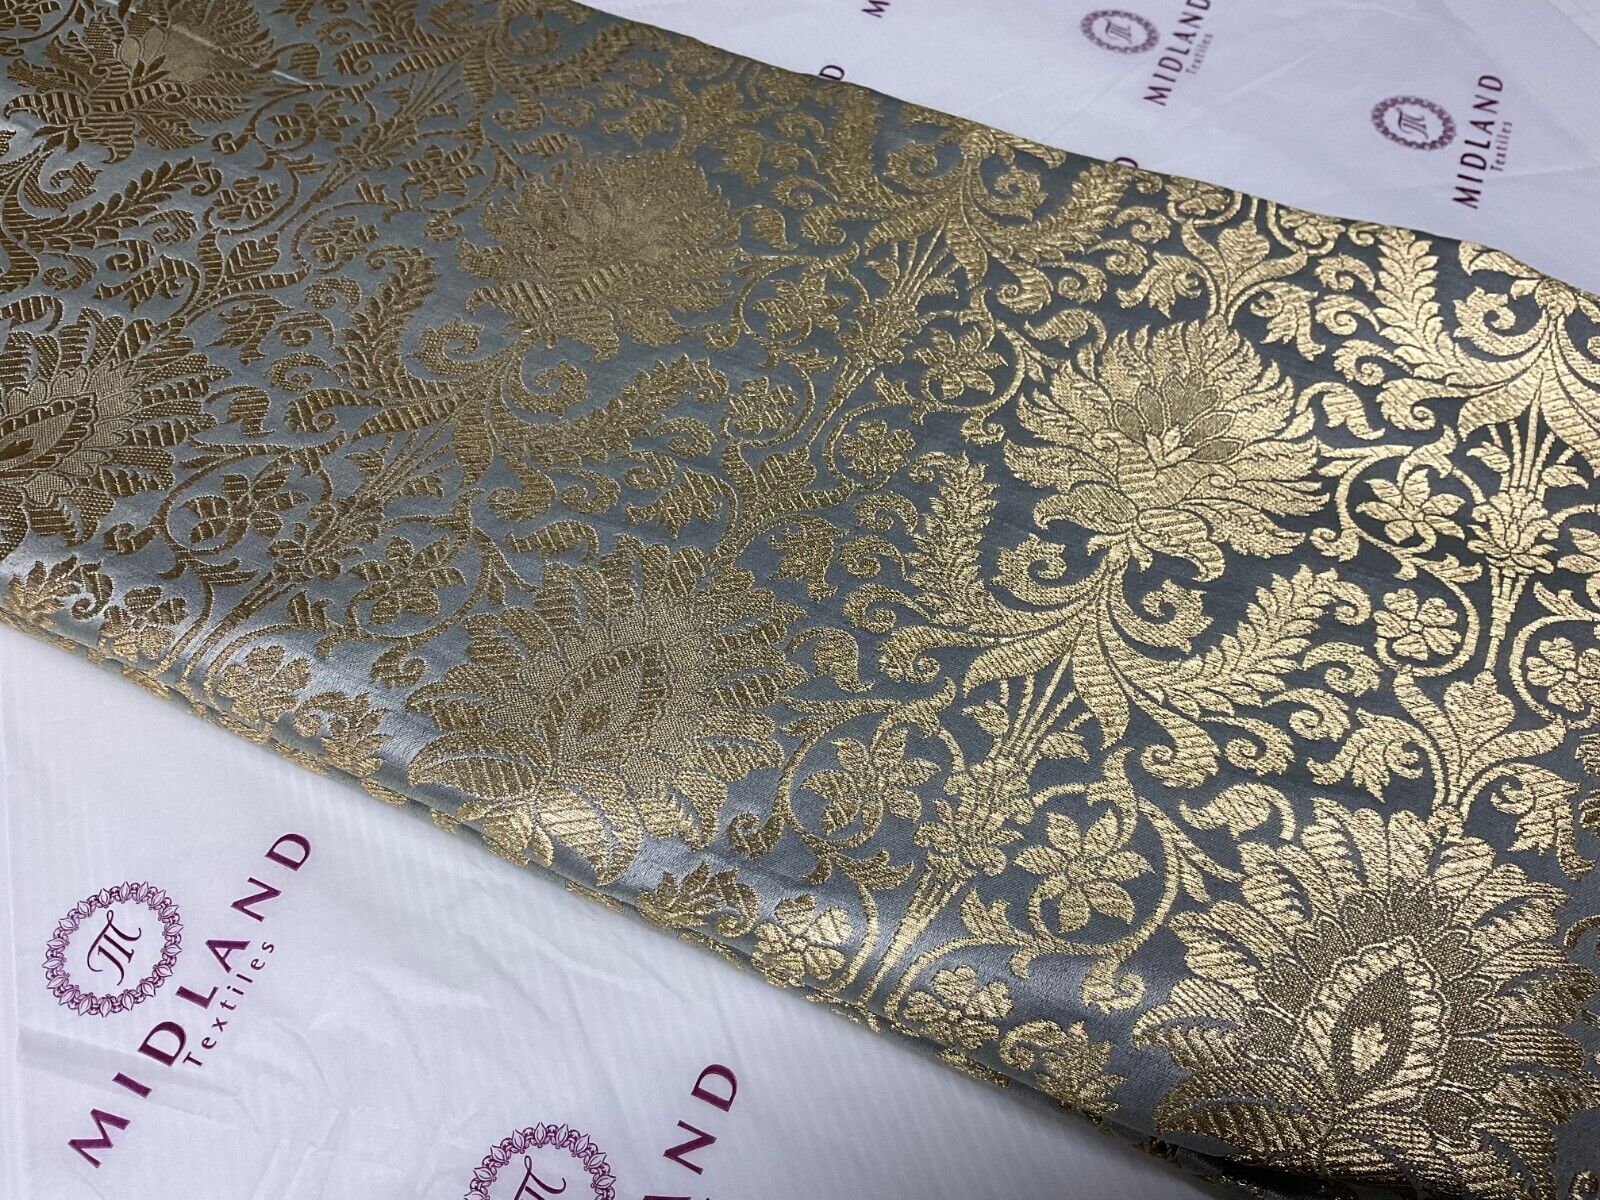 Indian Floral Ornamental wedding Banarsi Brocade Fabric 114cm wide M1774